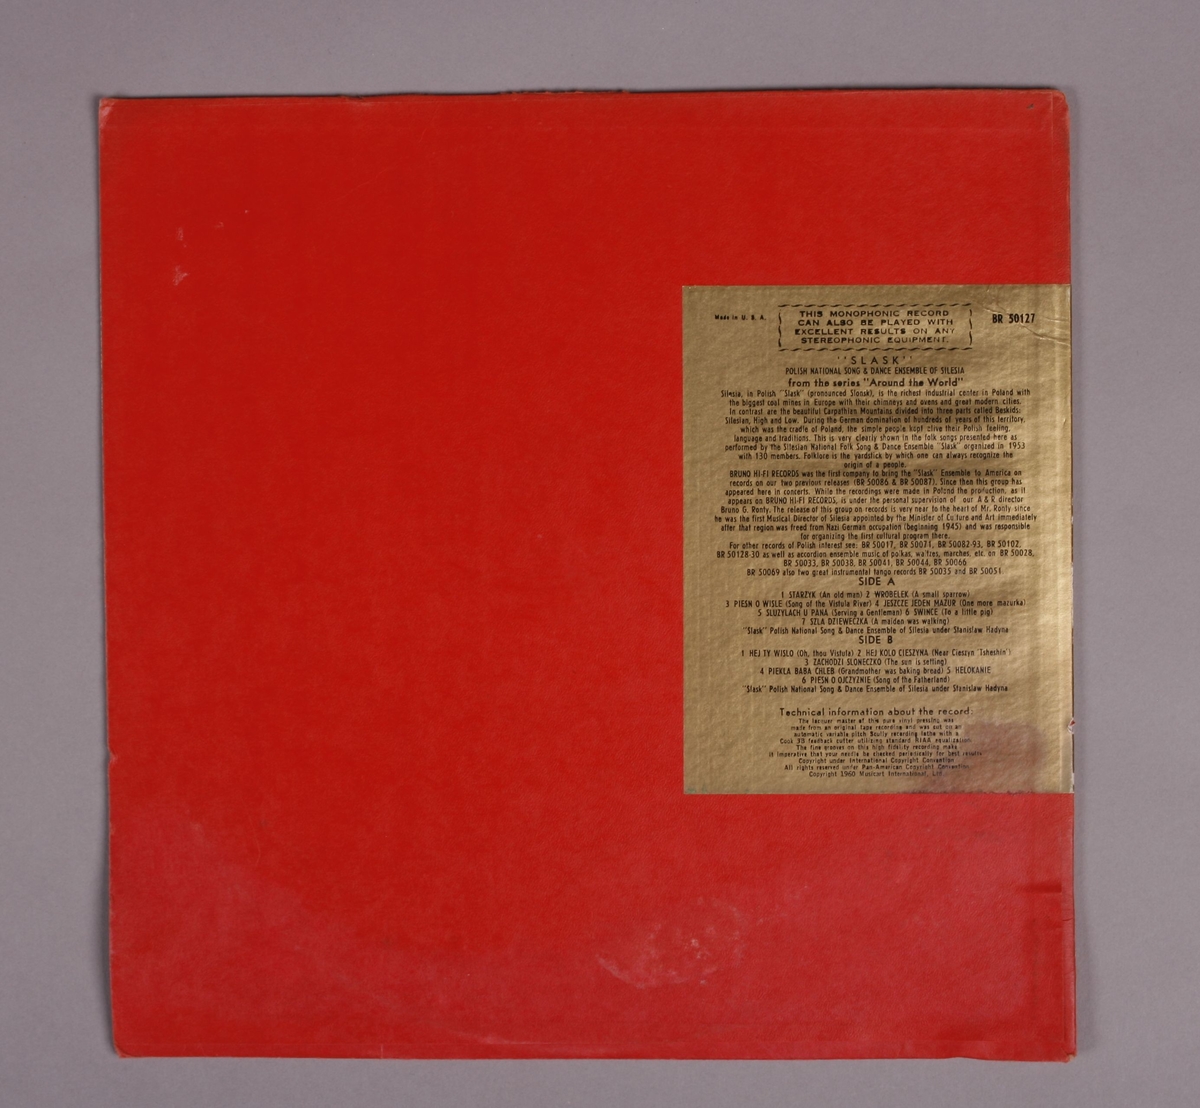 Grammofonplate i svart vinyl og plateomslag i tykk papp. Plata ligger i en uoriginal papirlomme stemplet "Angel Records".